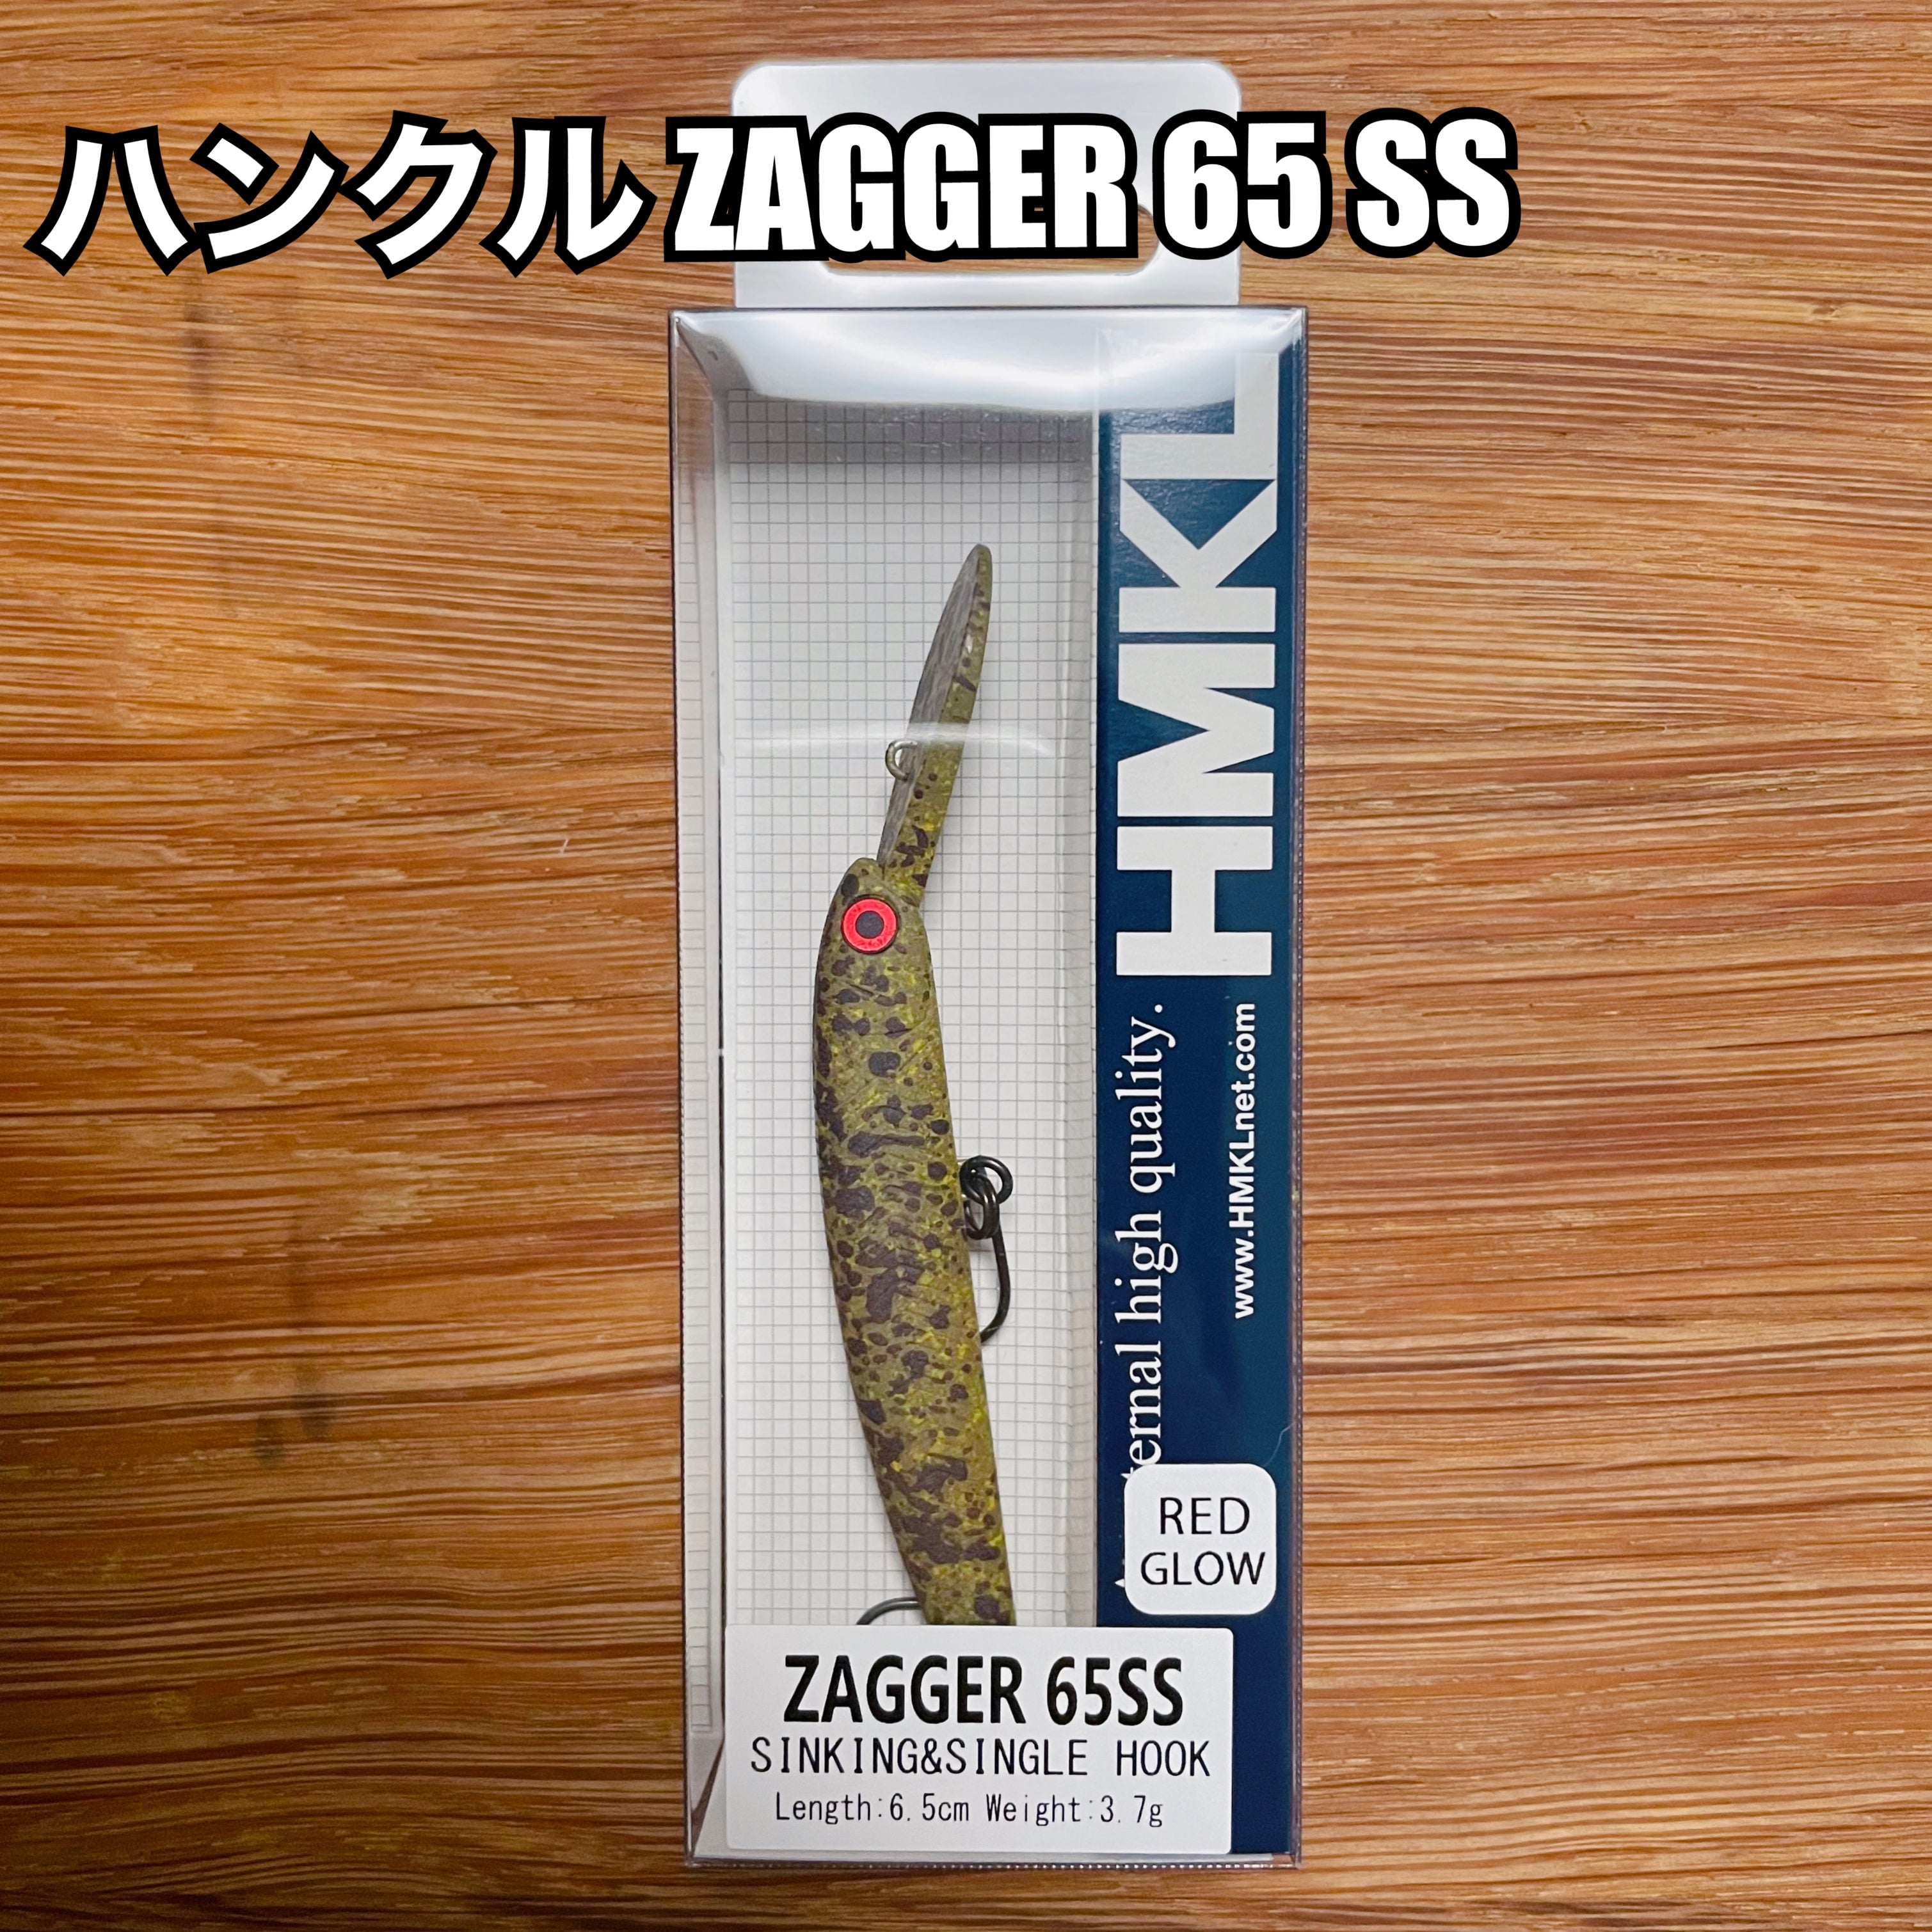 HMKL(ハンクル) ZAGGER 65 SS